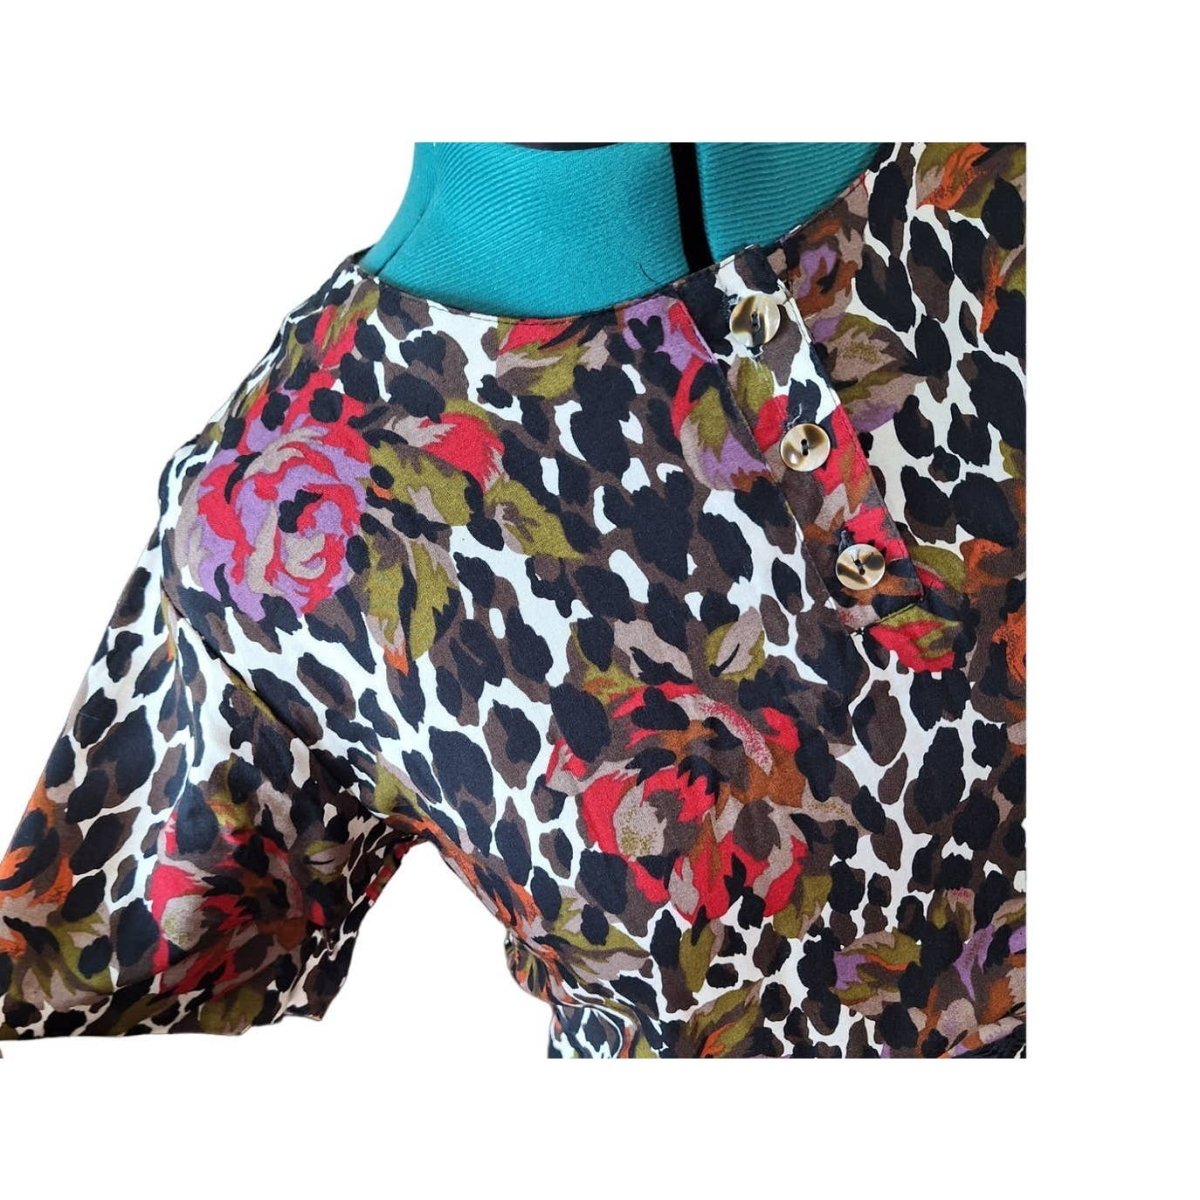 Vintage Leopard/Rose Maximalist Matching Skirt Set Size Medium - themallvintage The Mall Vintage